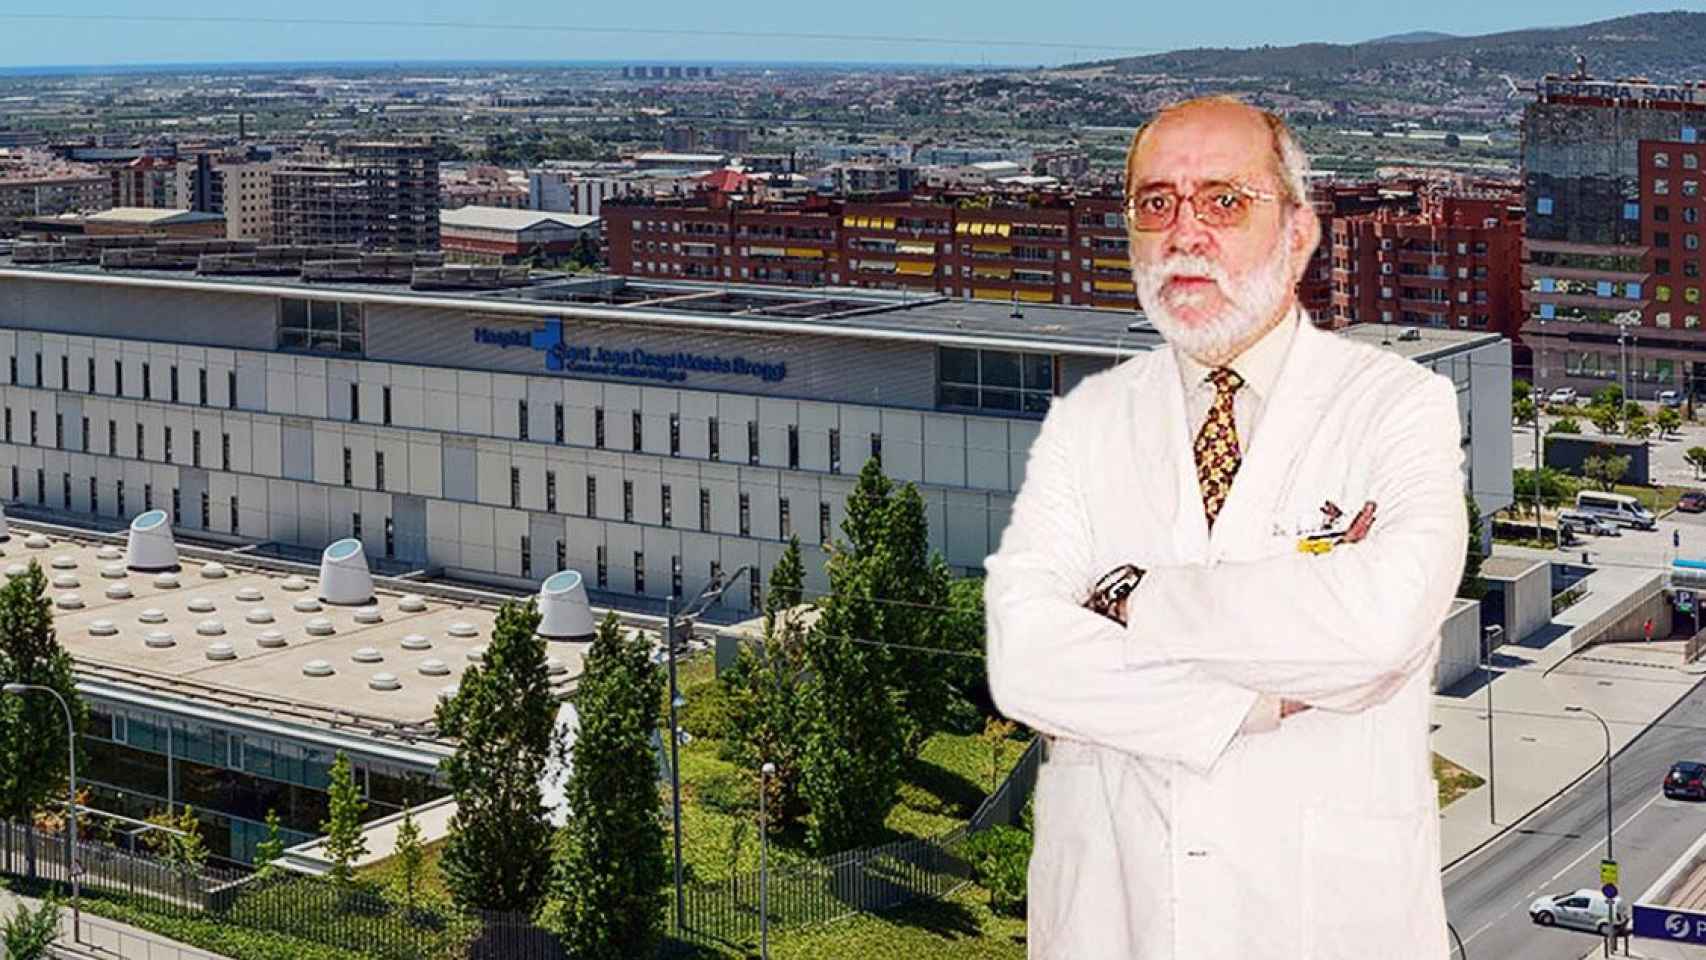 El Hospital Moisès Broggi de Sant Joan Despí y el doctor Jordi Desola / FOTOMONTAJE CG